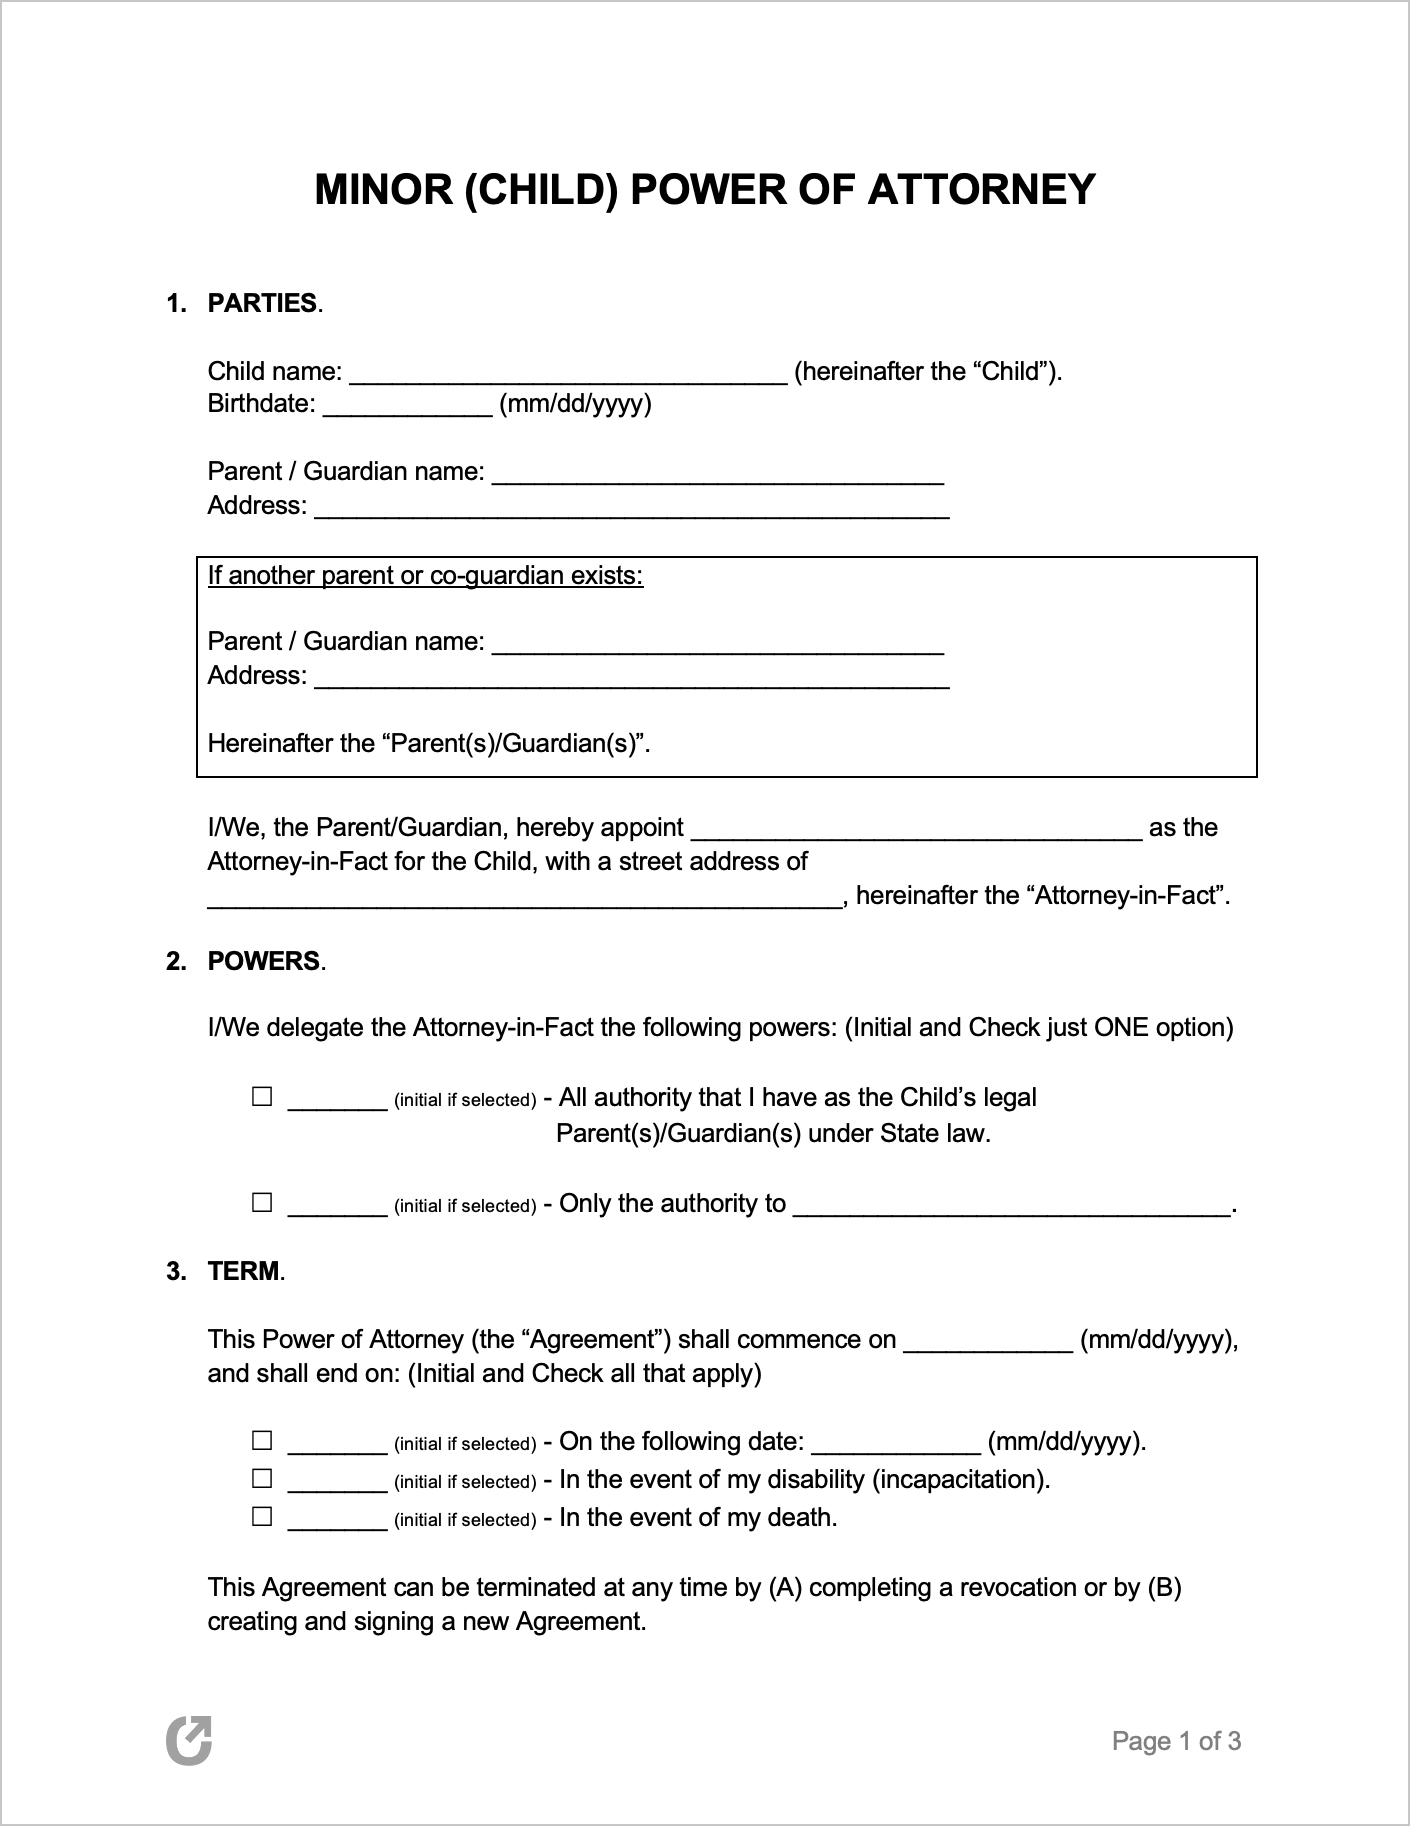 free-minor-child-power-of-attorney-forms-pdf-word-rtf